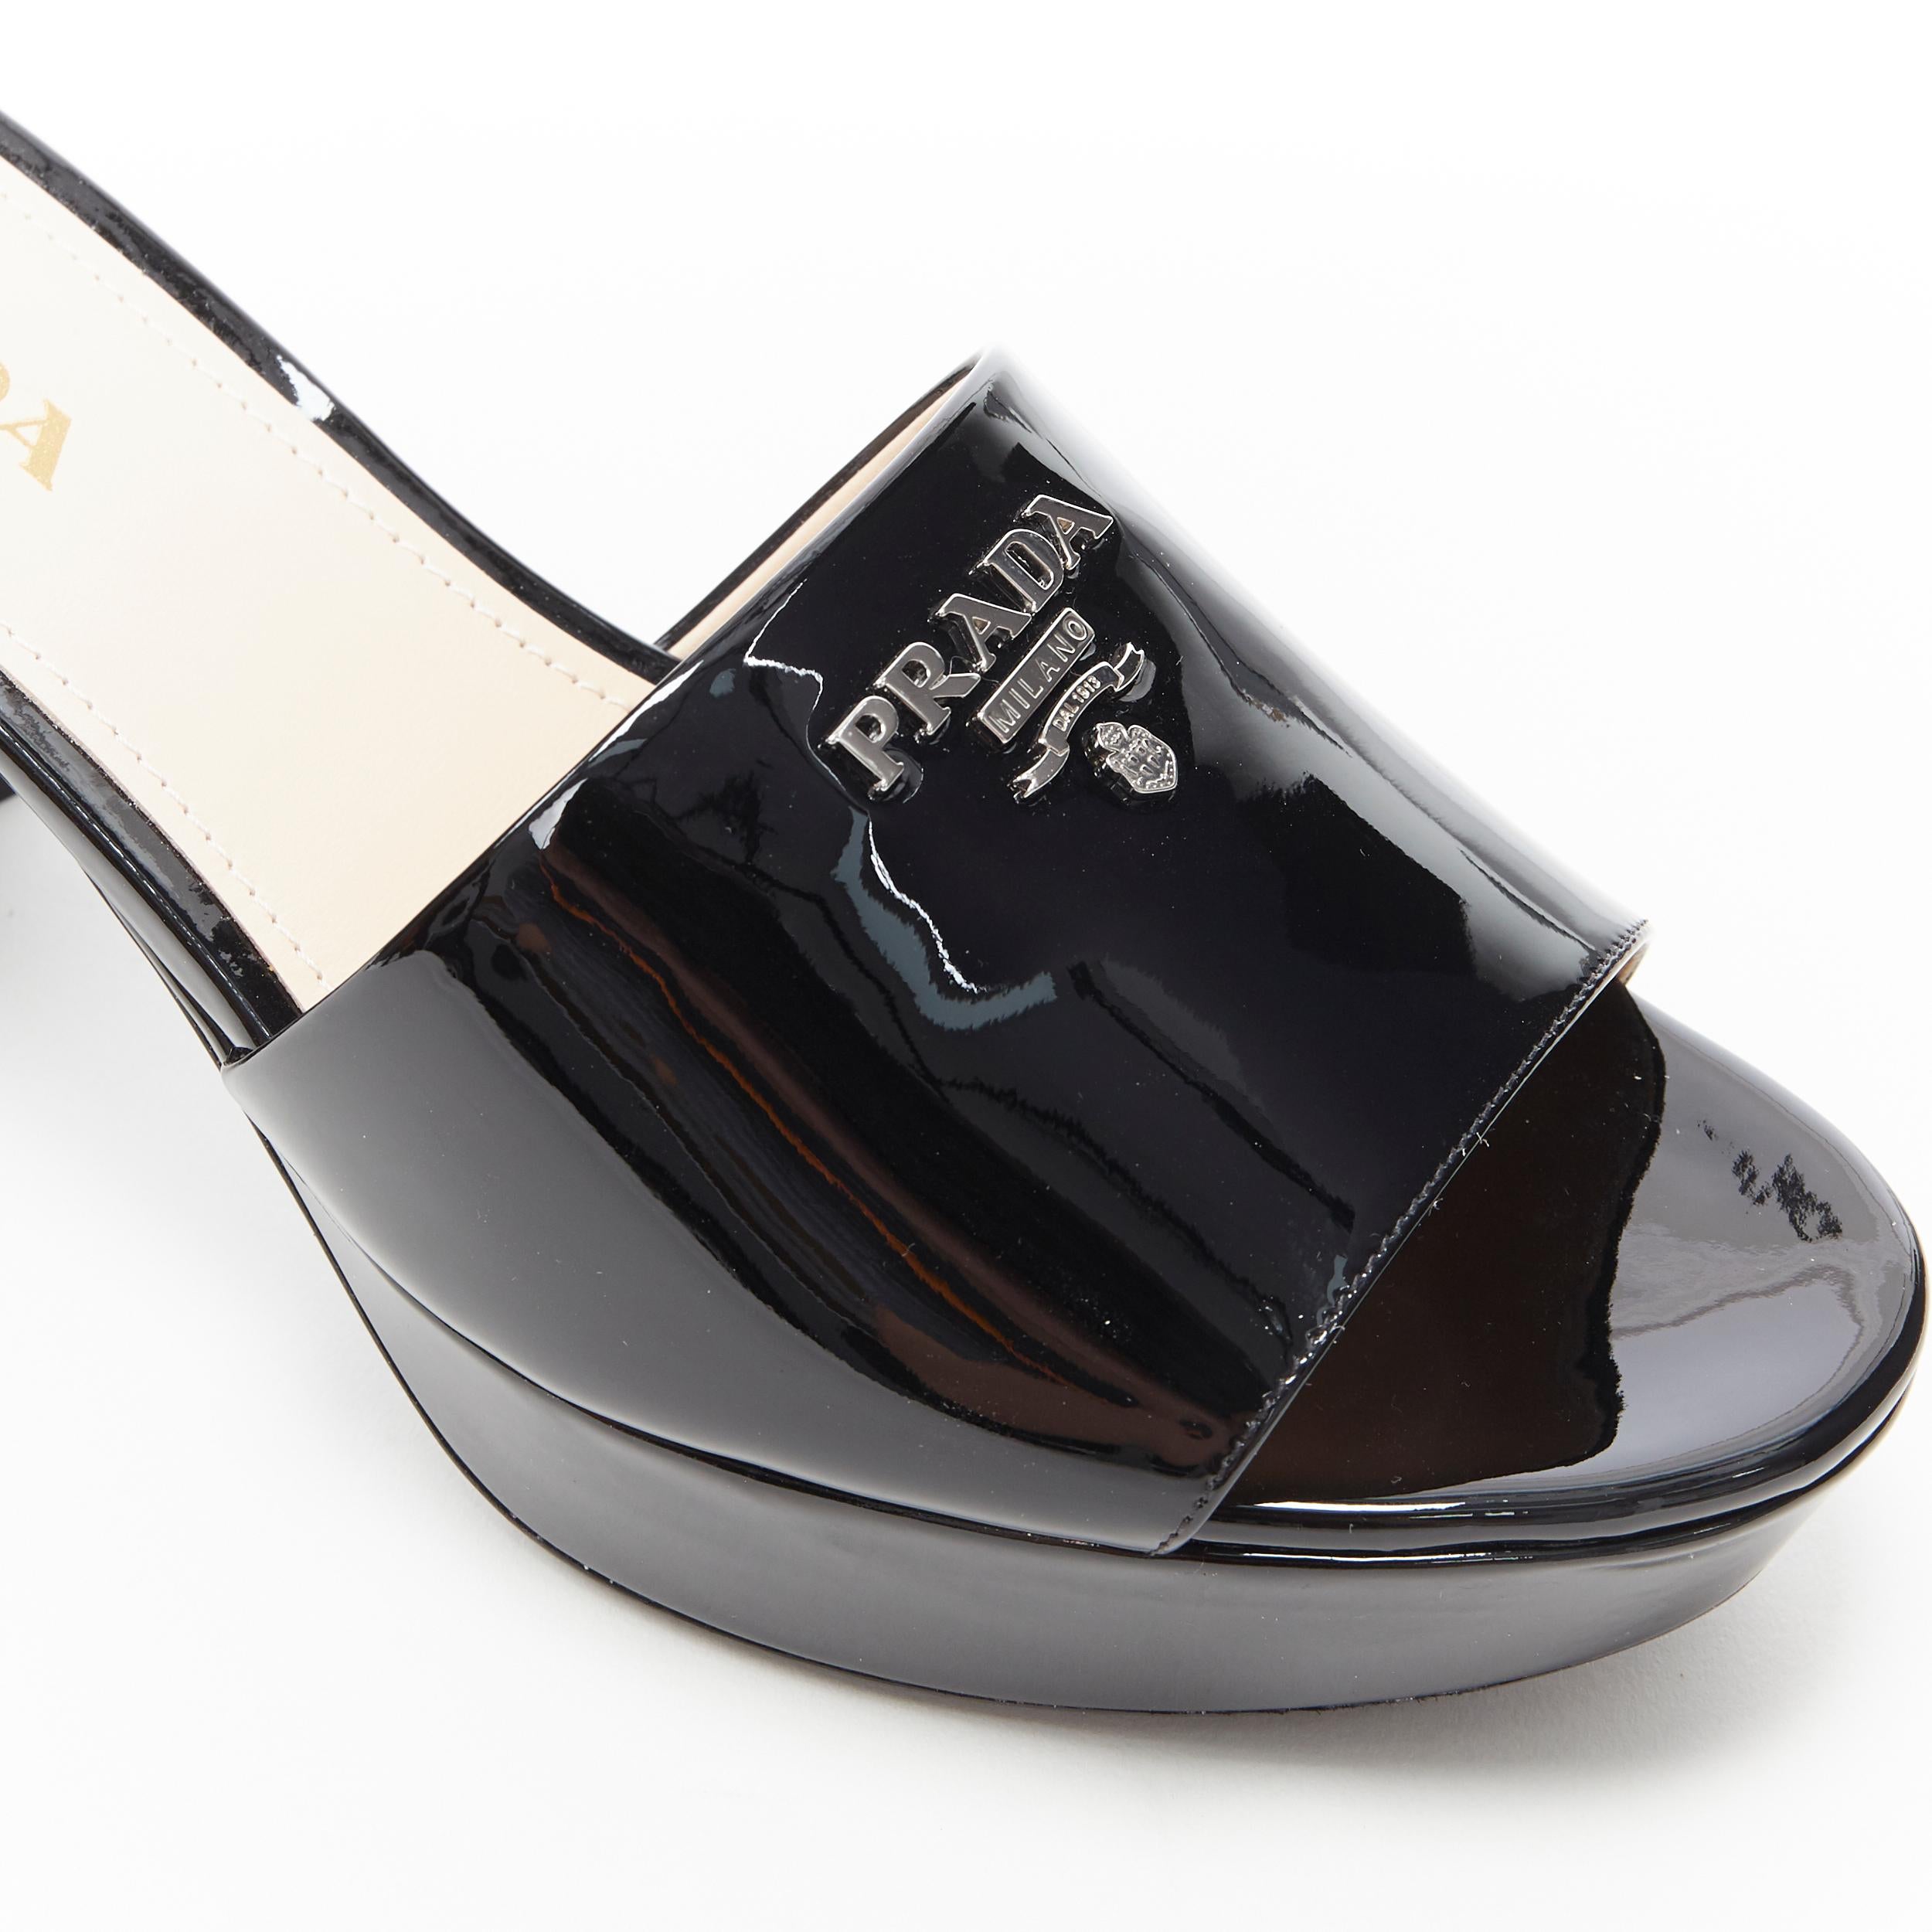 new PRADA black patent silver logo platform block heel mule clog shoes EU39
Brand: Prada
Designer: Miuccia Prada
Model Name / Style: Mule
Material: Patent leather
Color: Black
Pattern: Solid
Extra Detail: Black patent leather. Silver-tone hardware